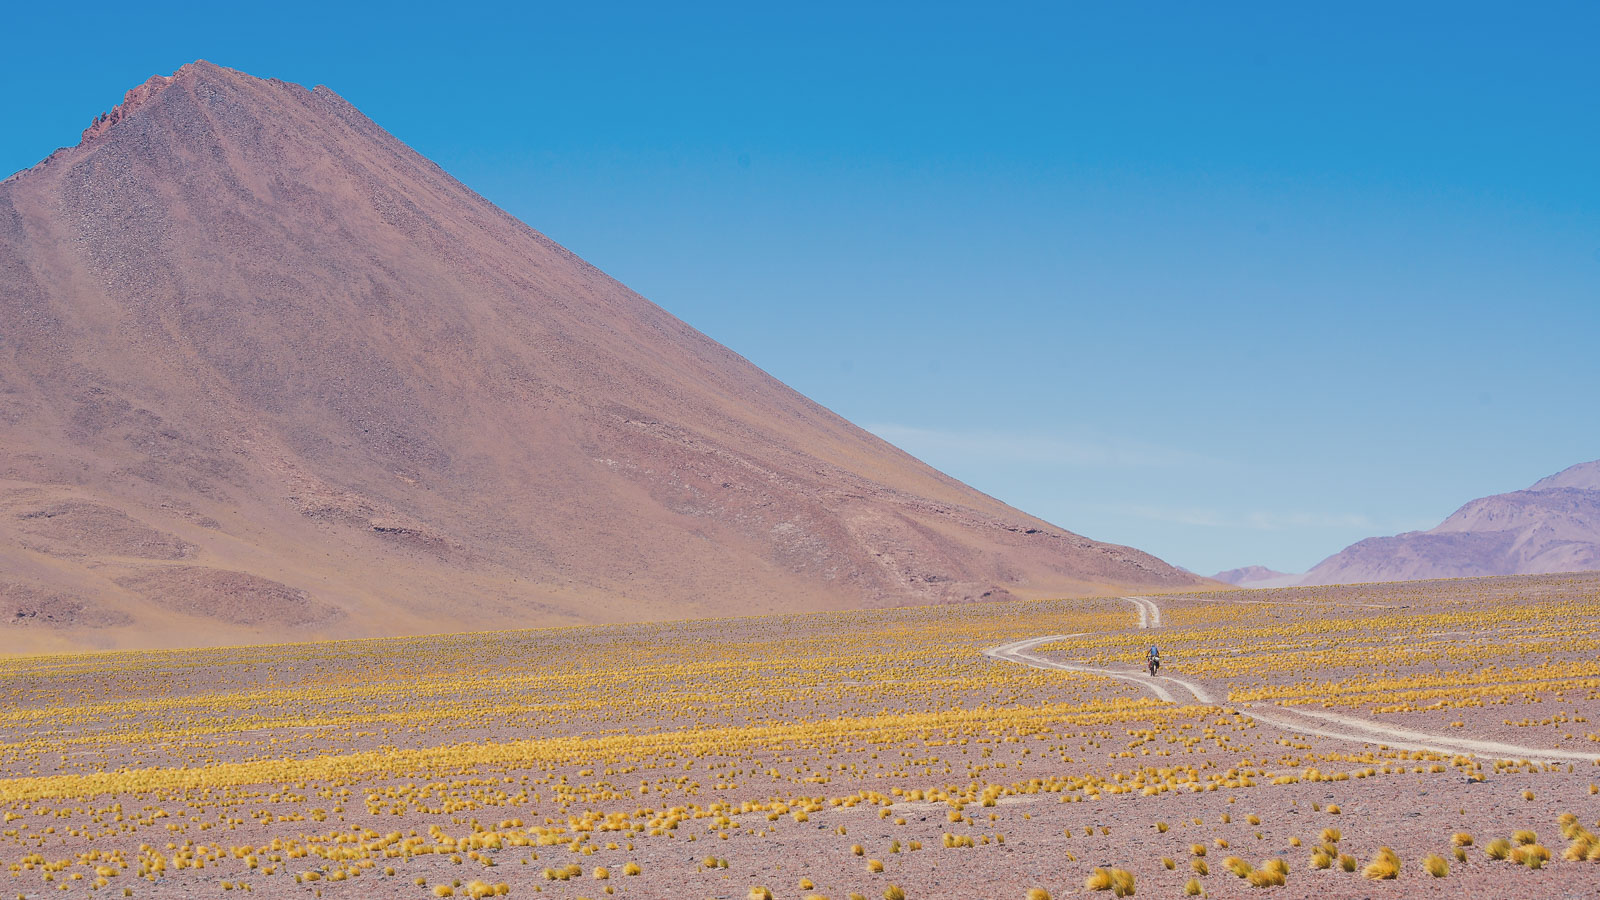 Chile/Argentina: San Pedro de Atacama – Fiambalá via Ruta de los Seis Miles, Norte